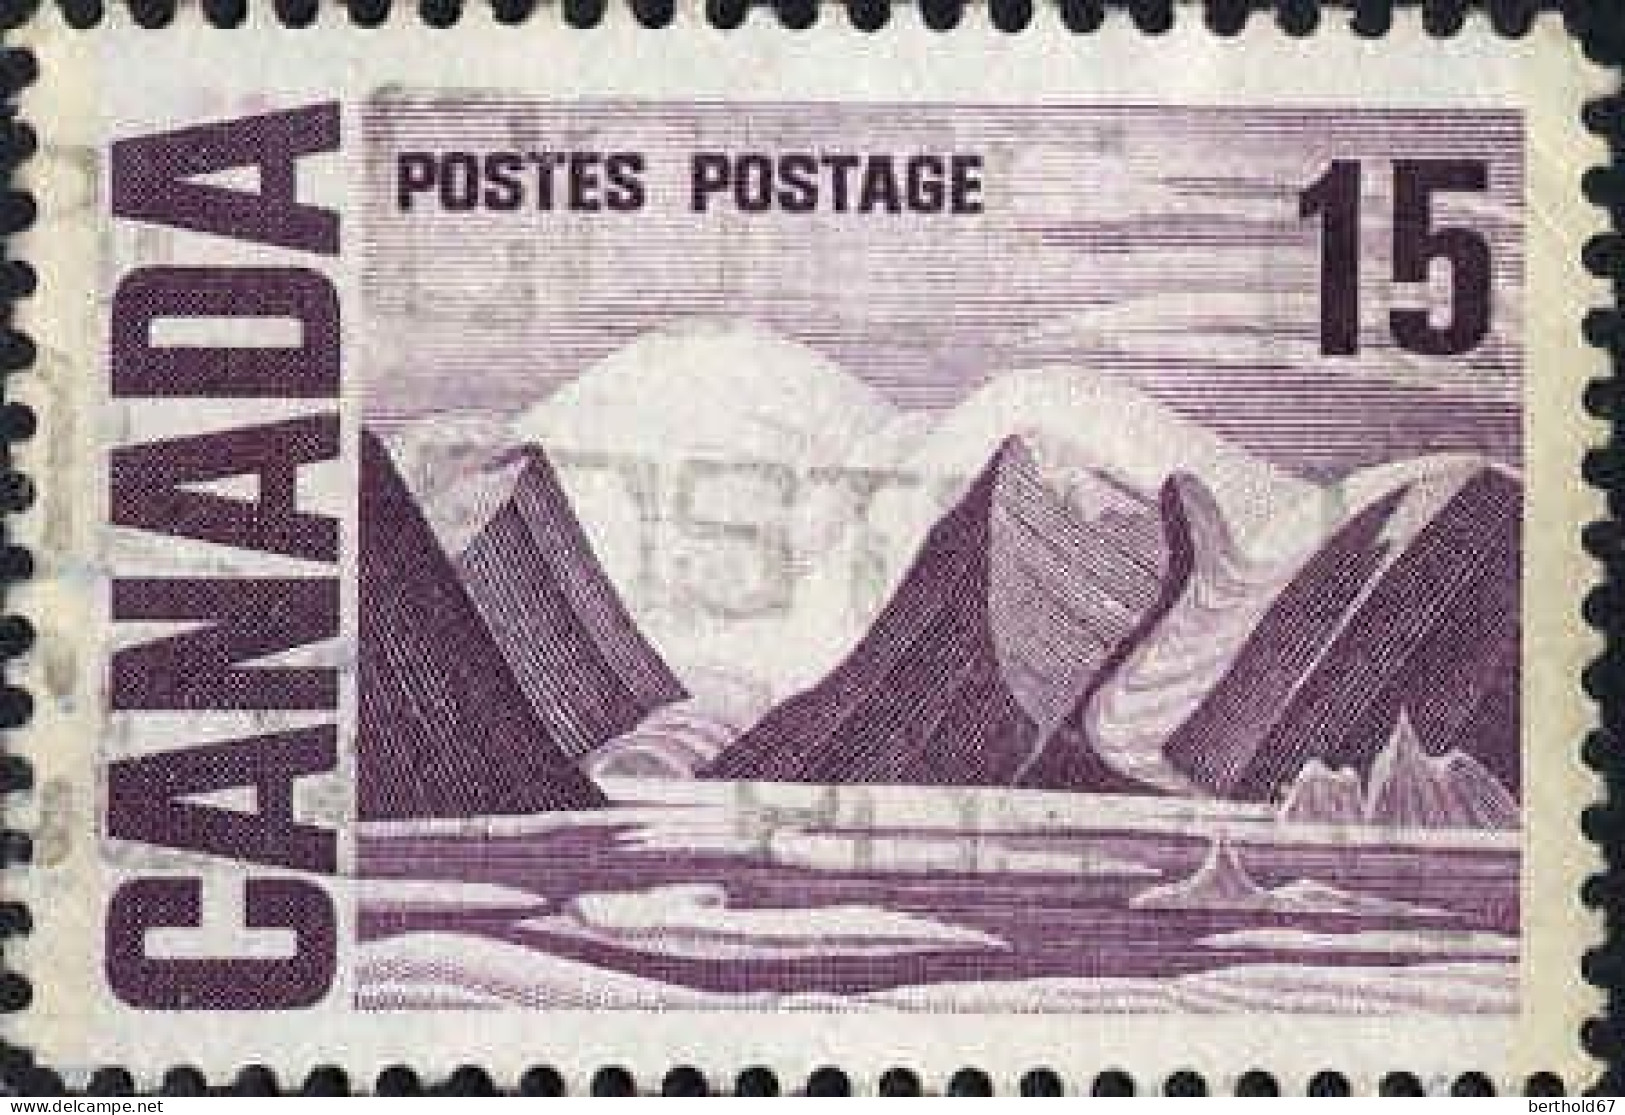 Canada Poste Obl Yv: 385 Mi:405Ax Ile Bylot (Belle Obl.mécanique) - Used Stamps